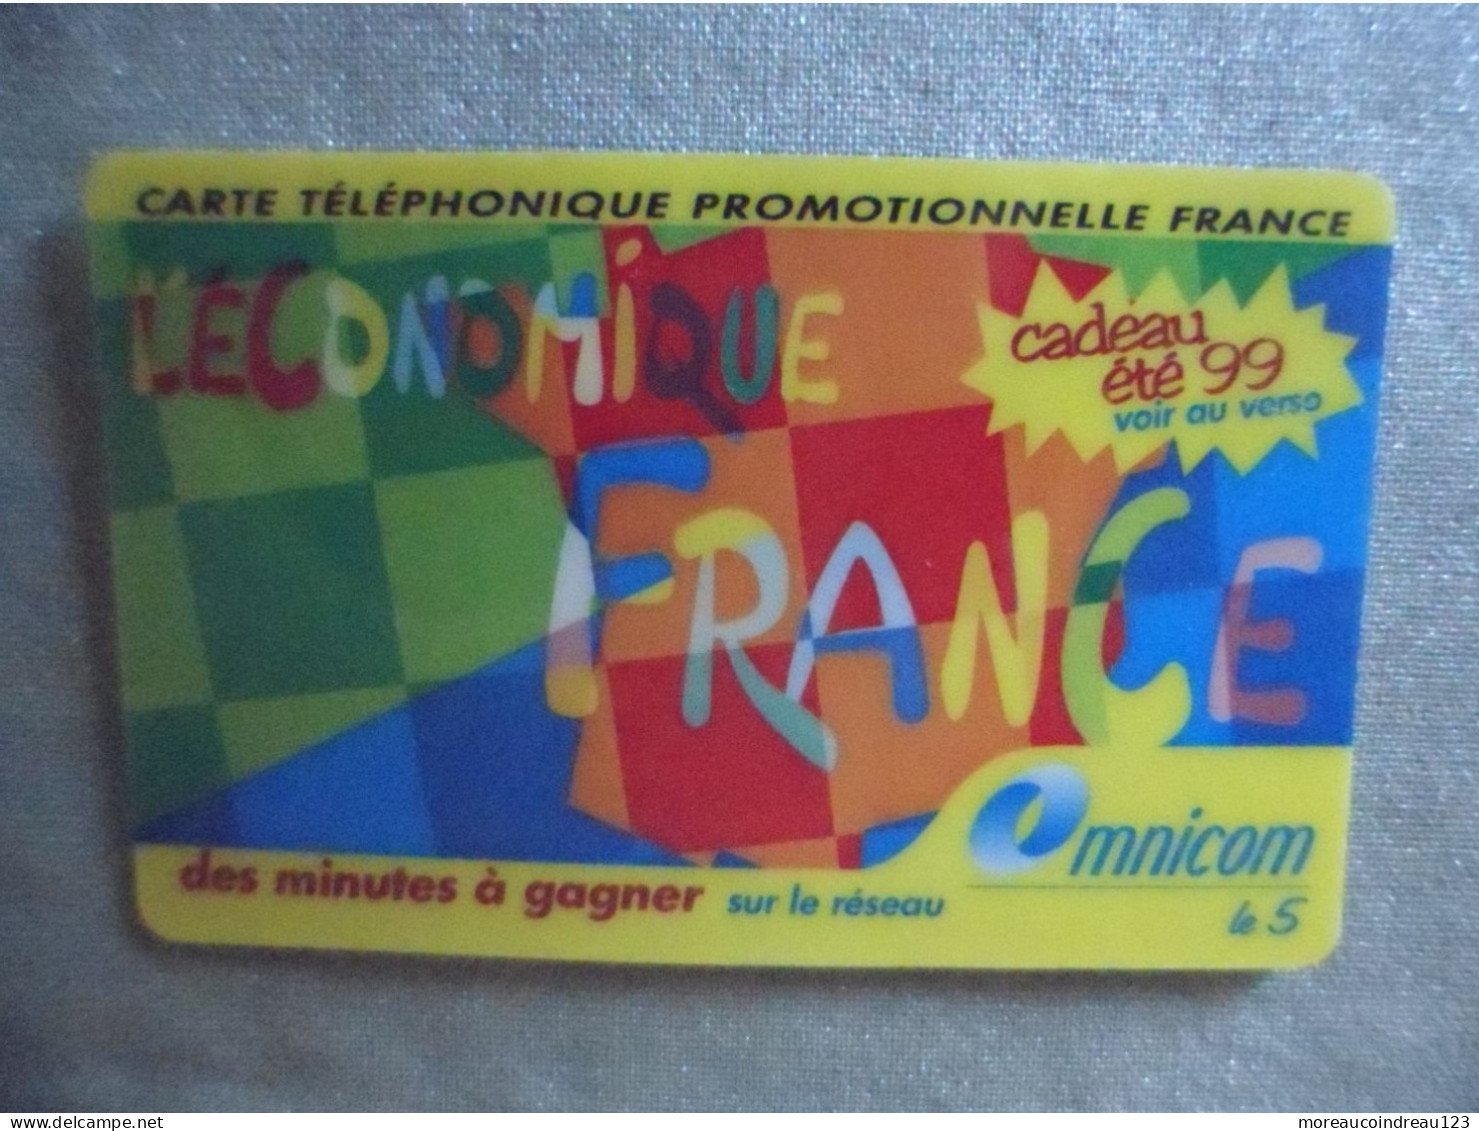 Télécarte Omnicom L Economique France - Telecom